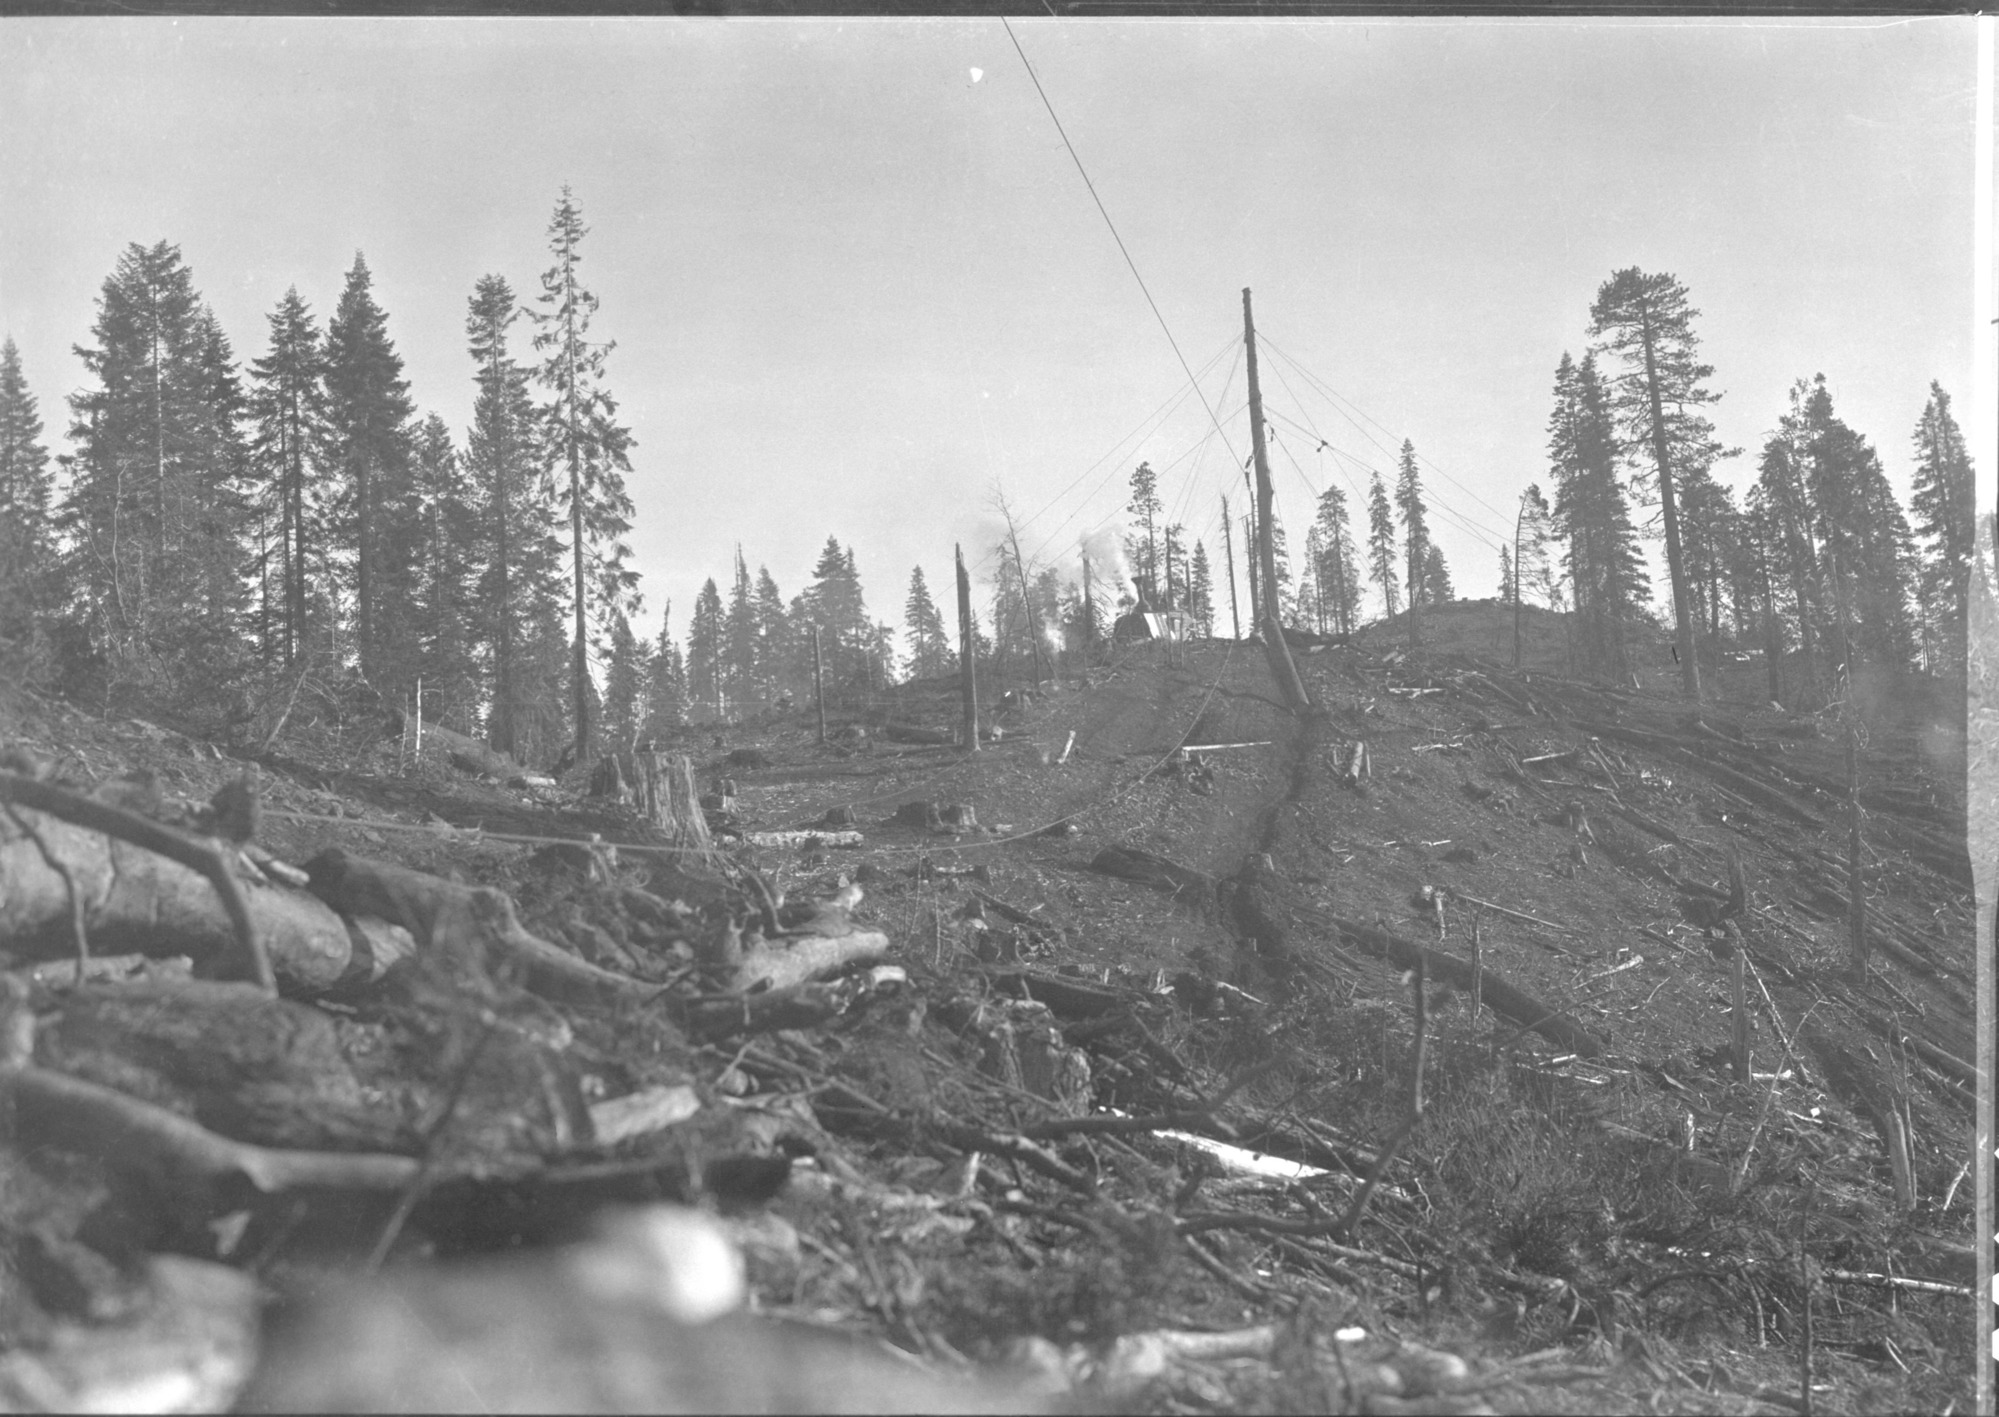 Yosemite Lumber Co. Skyline method of logging.